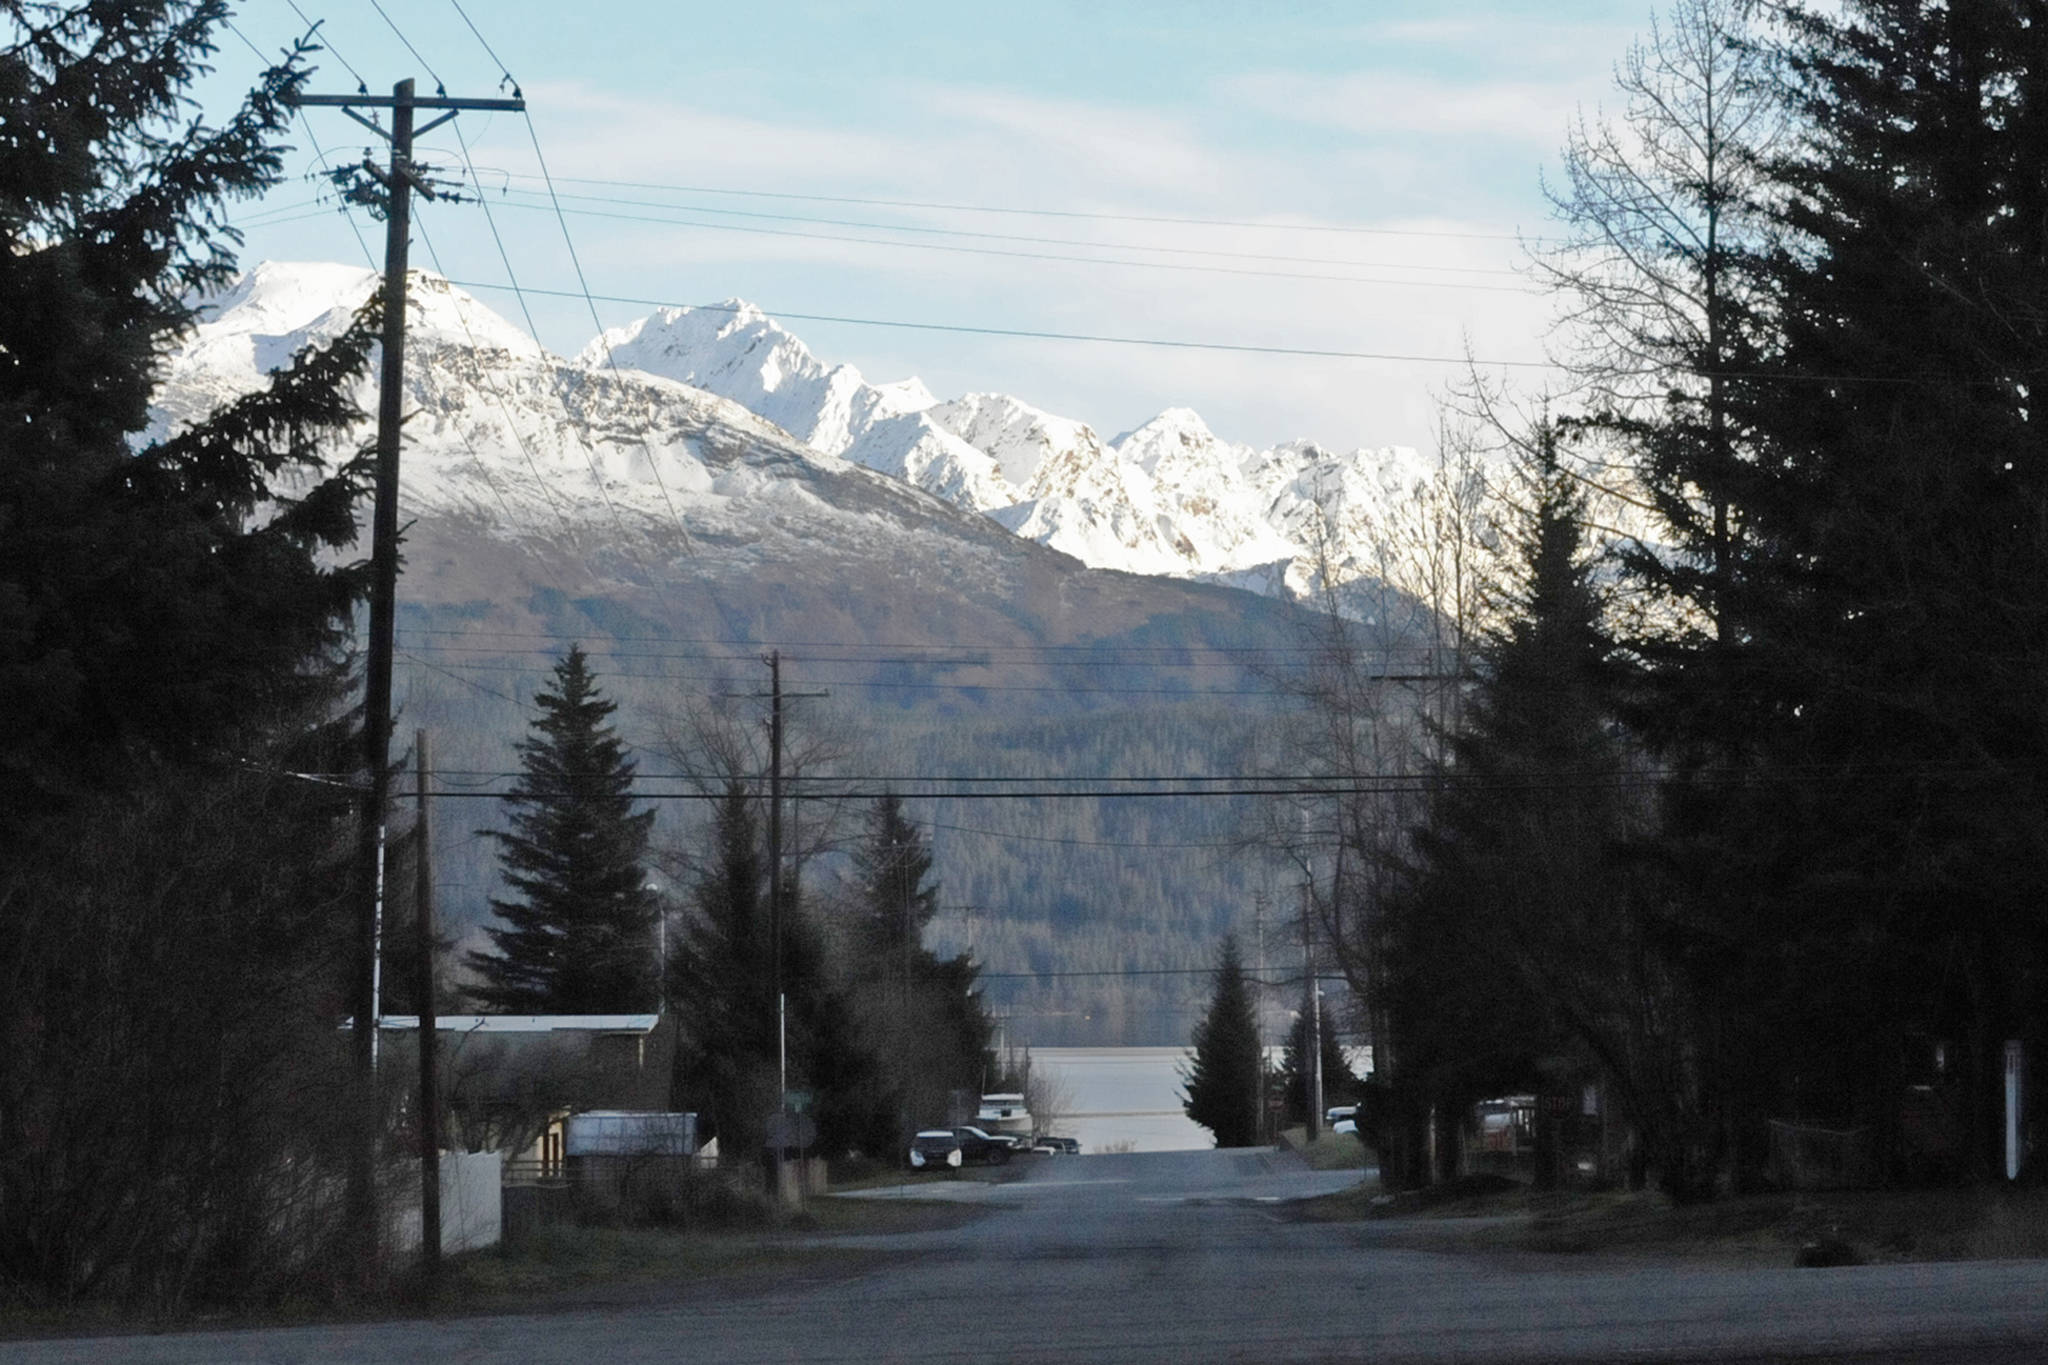 In this November 2016 photo, the Chugach Mountains loom high above Monroe Street in Seward, Alaska. (Photo by Elizabeth Earl/Peninsula Clarion, file)